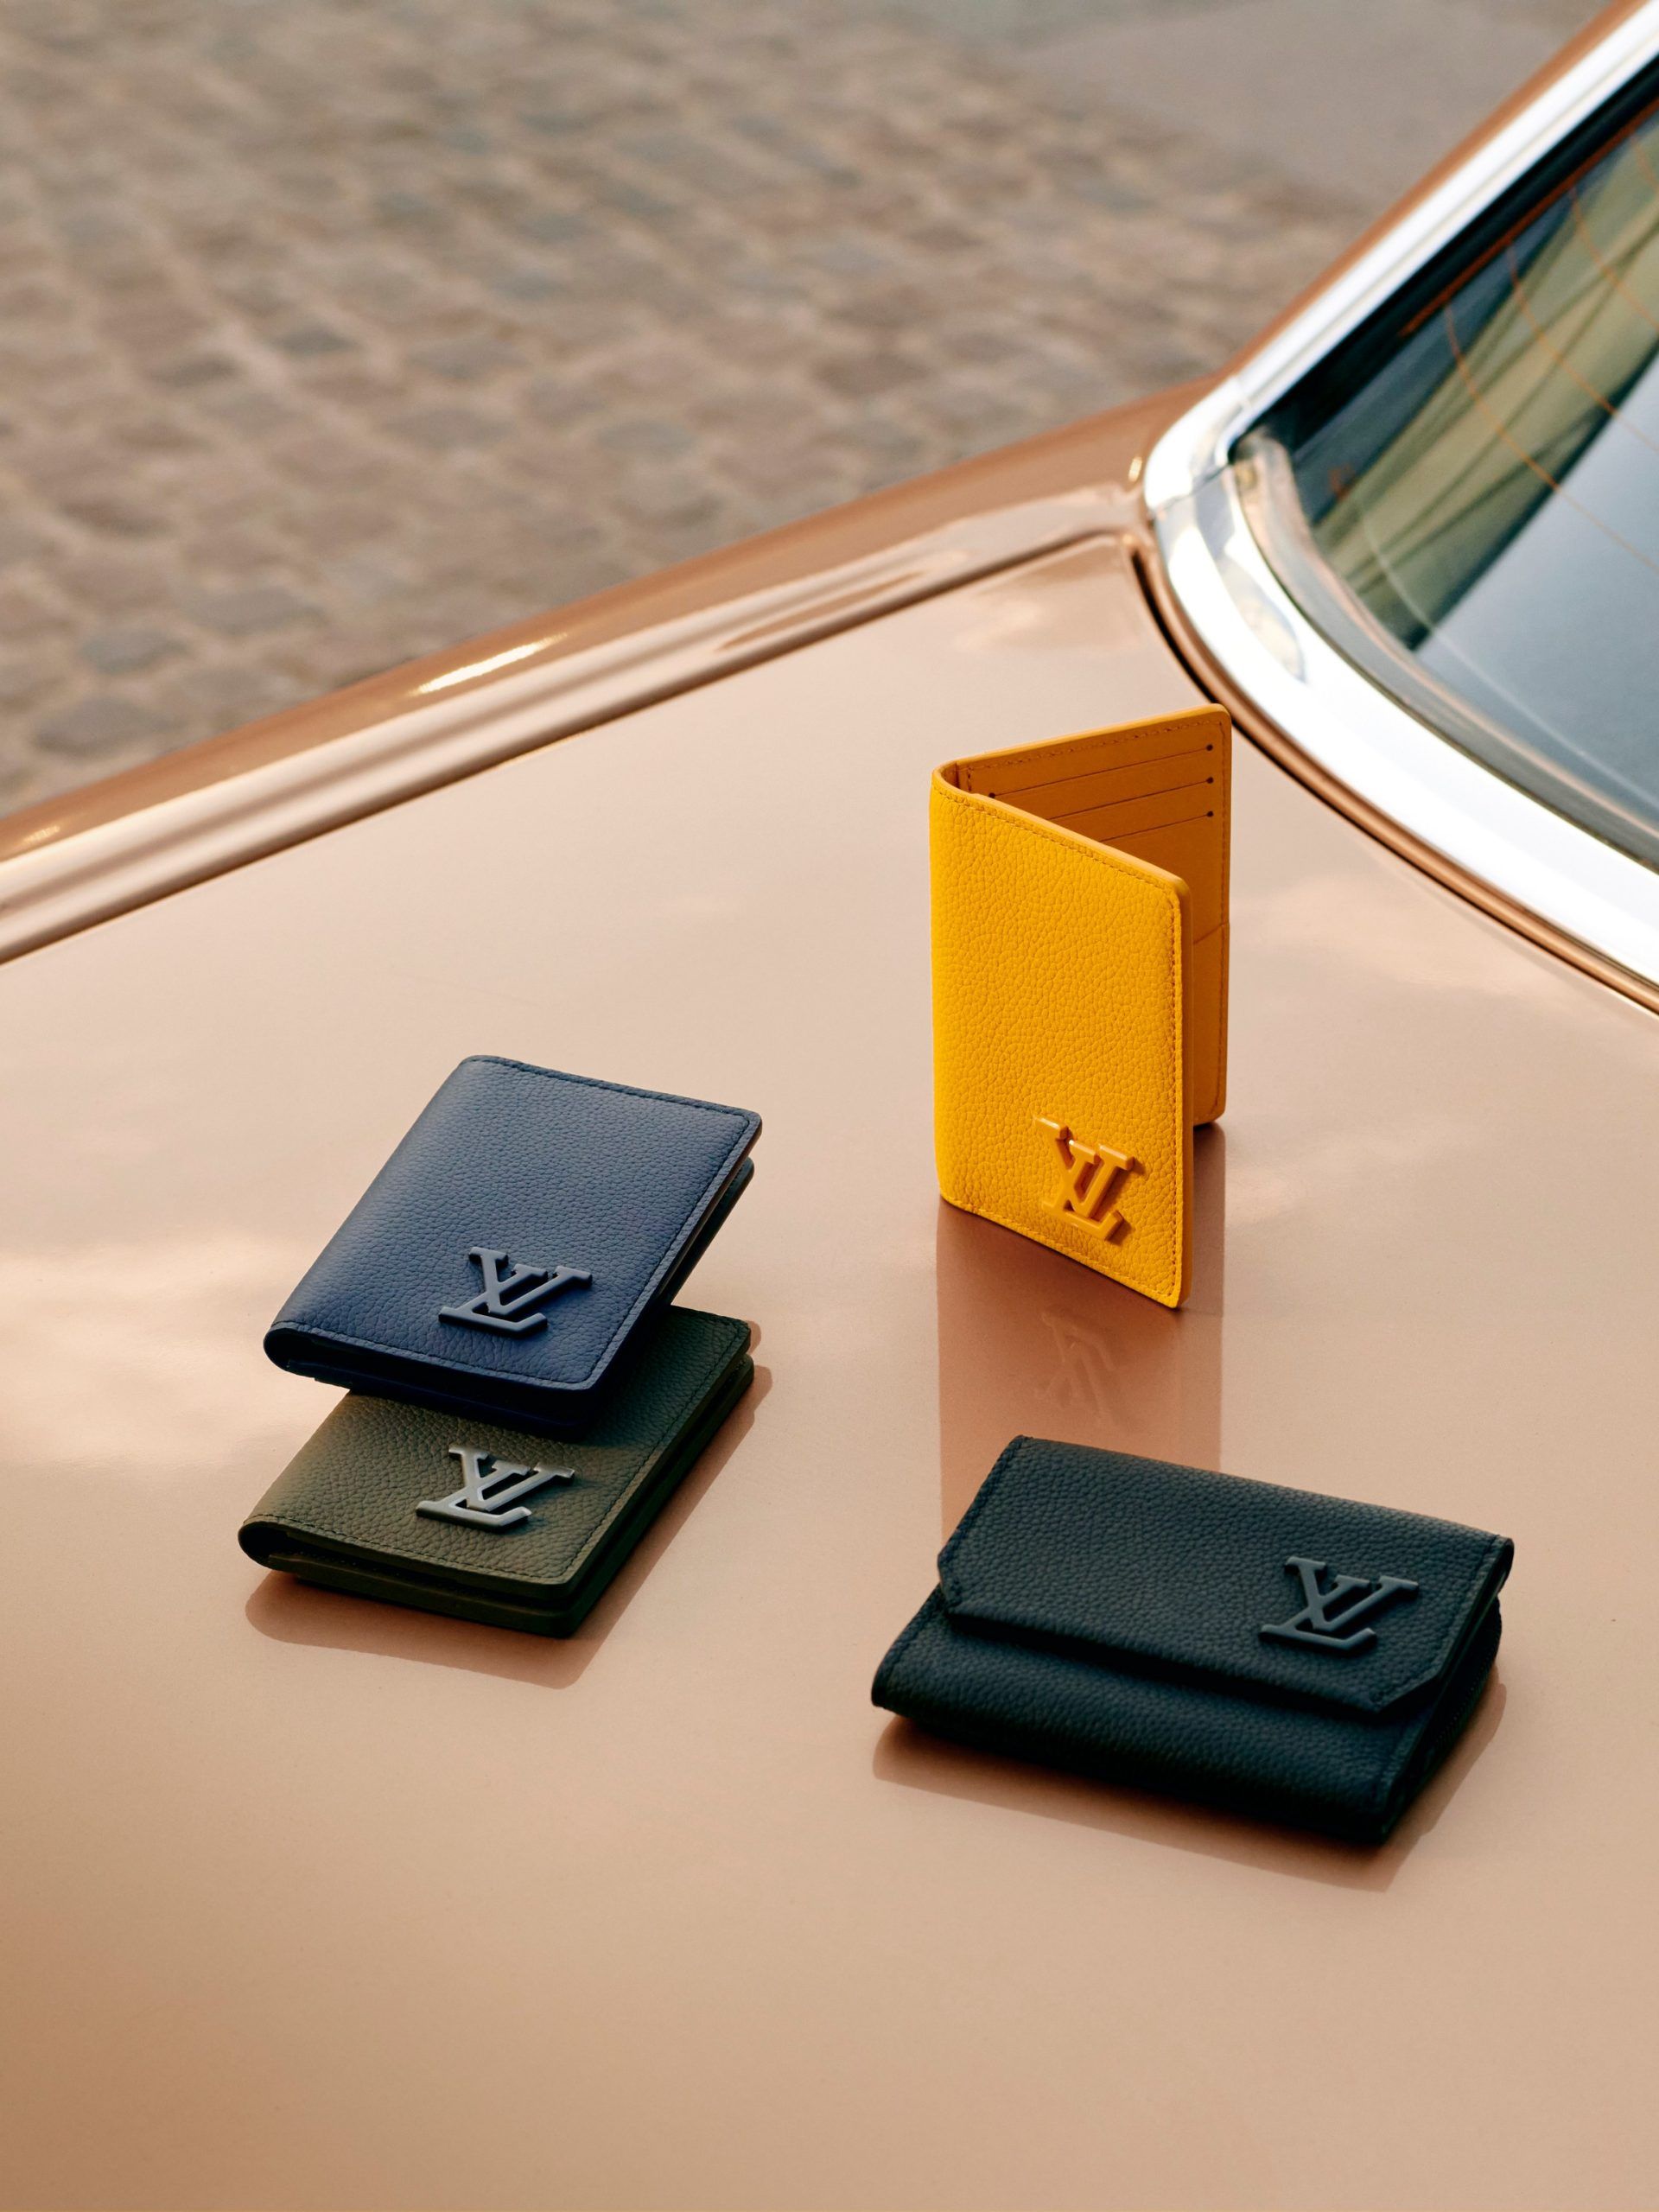 Louis Vuitton Luggage - World of Wanderlust